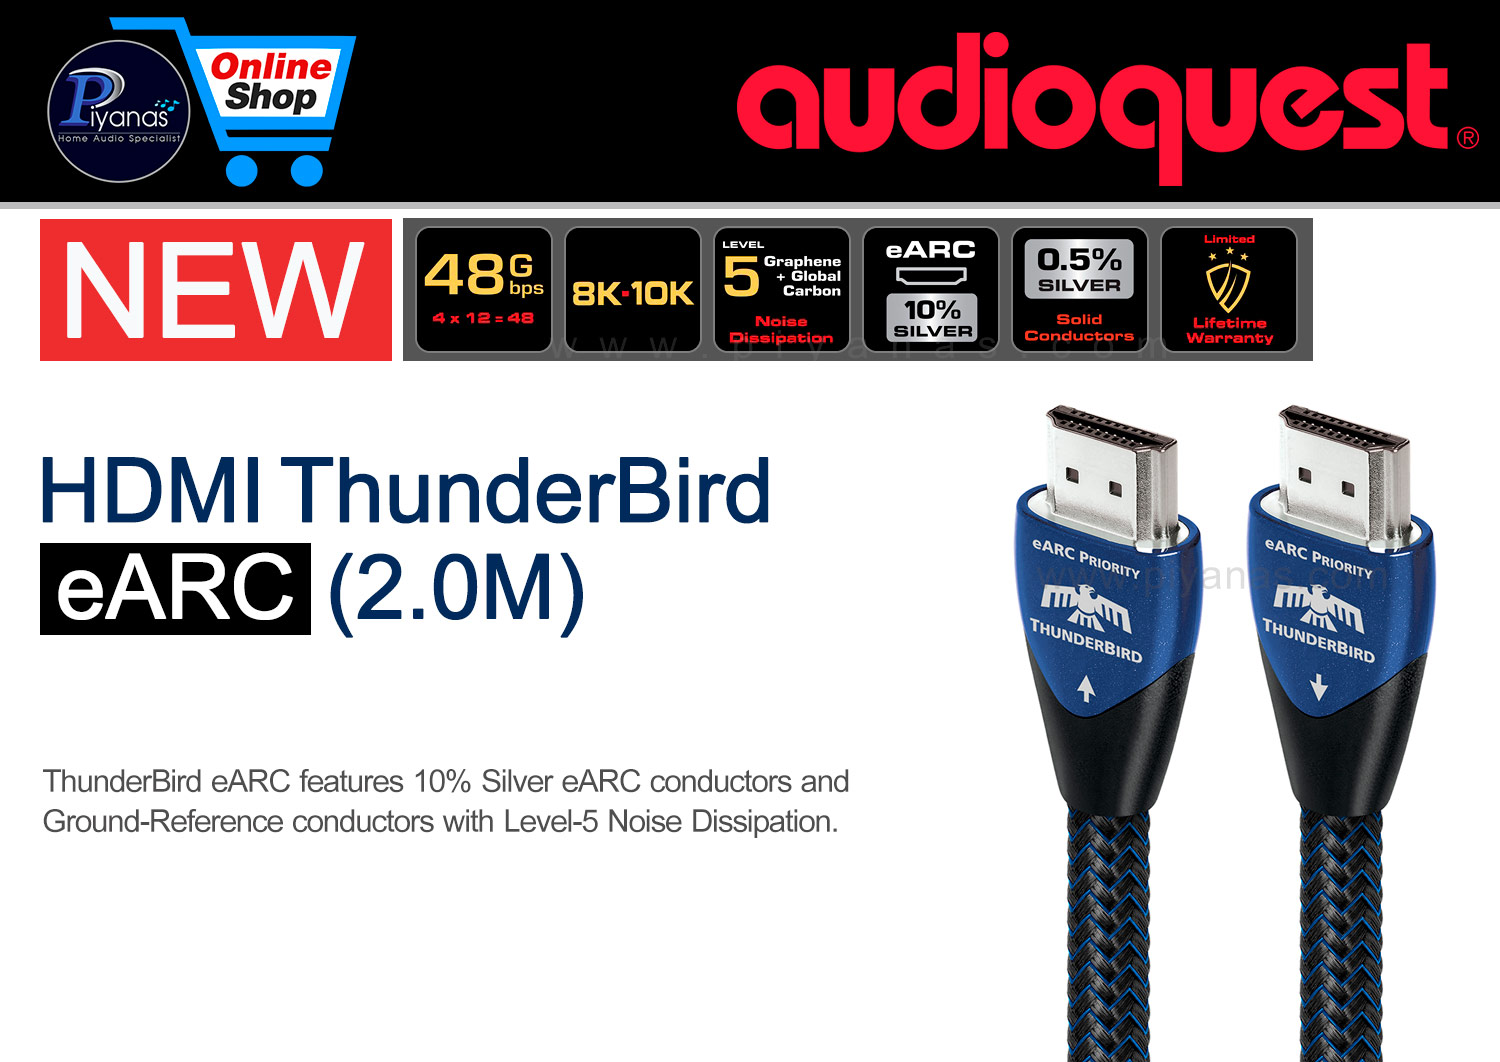 HDMI-ThunderBird eARC (2.0M)